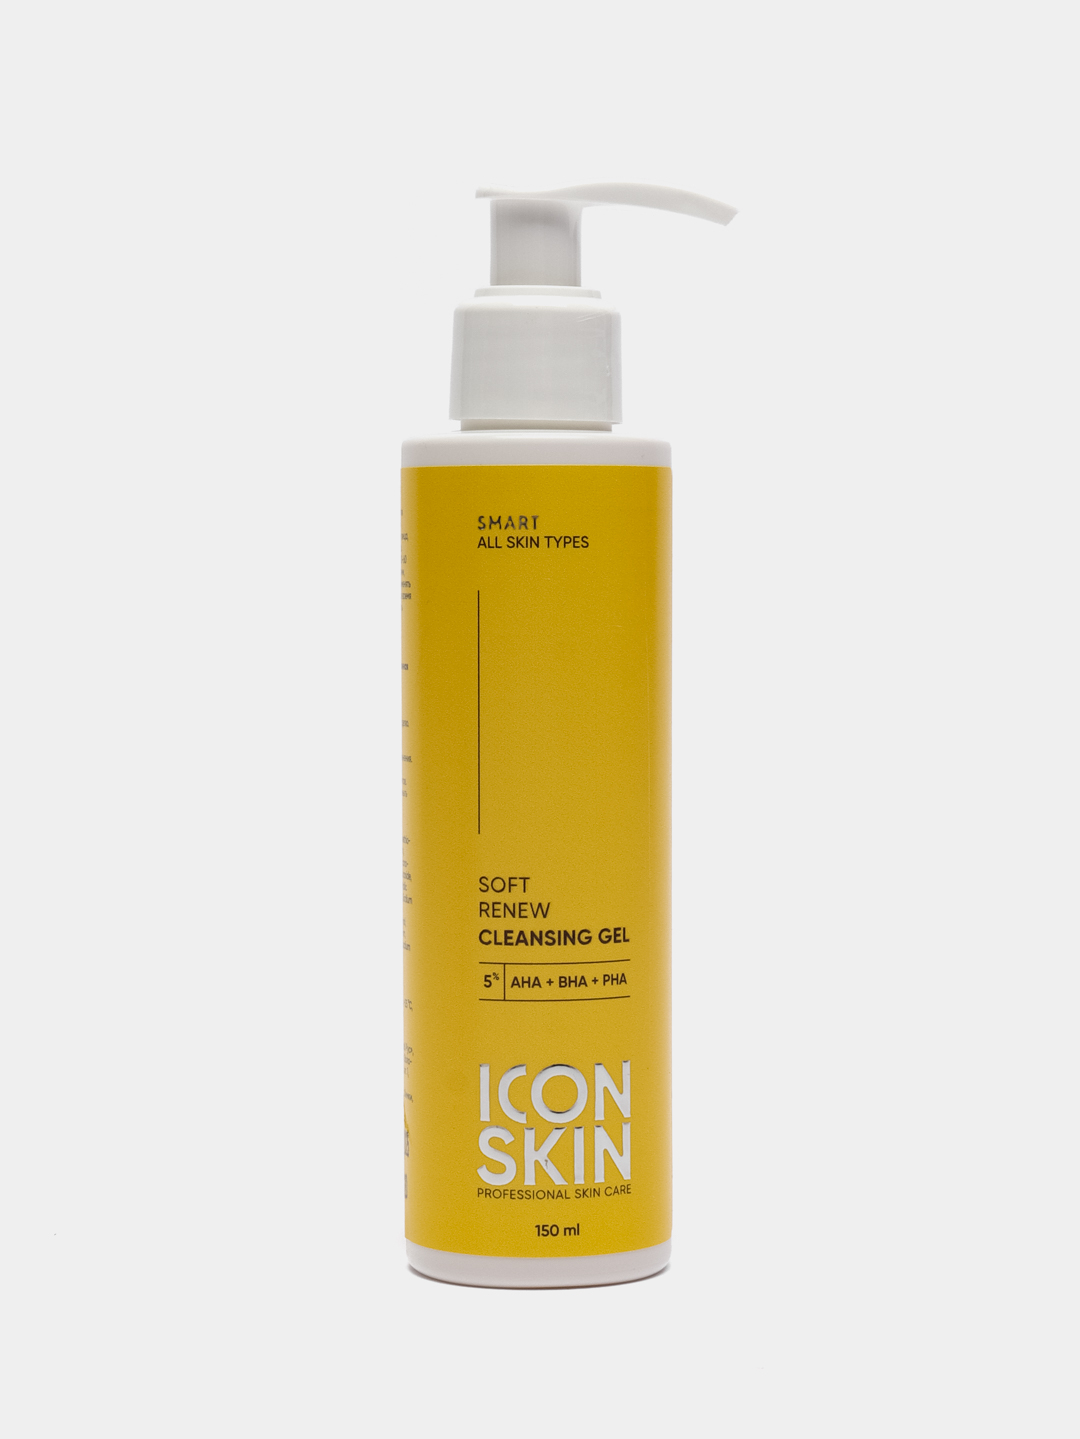 Icon Skin Soft Renew гель для умывания. Masil 2 refreshing Soft Foam мягкая освежающая пенка 300мл.